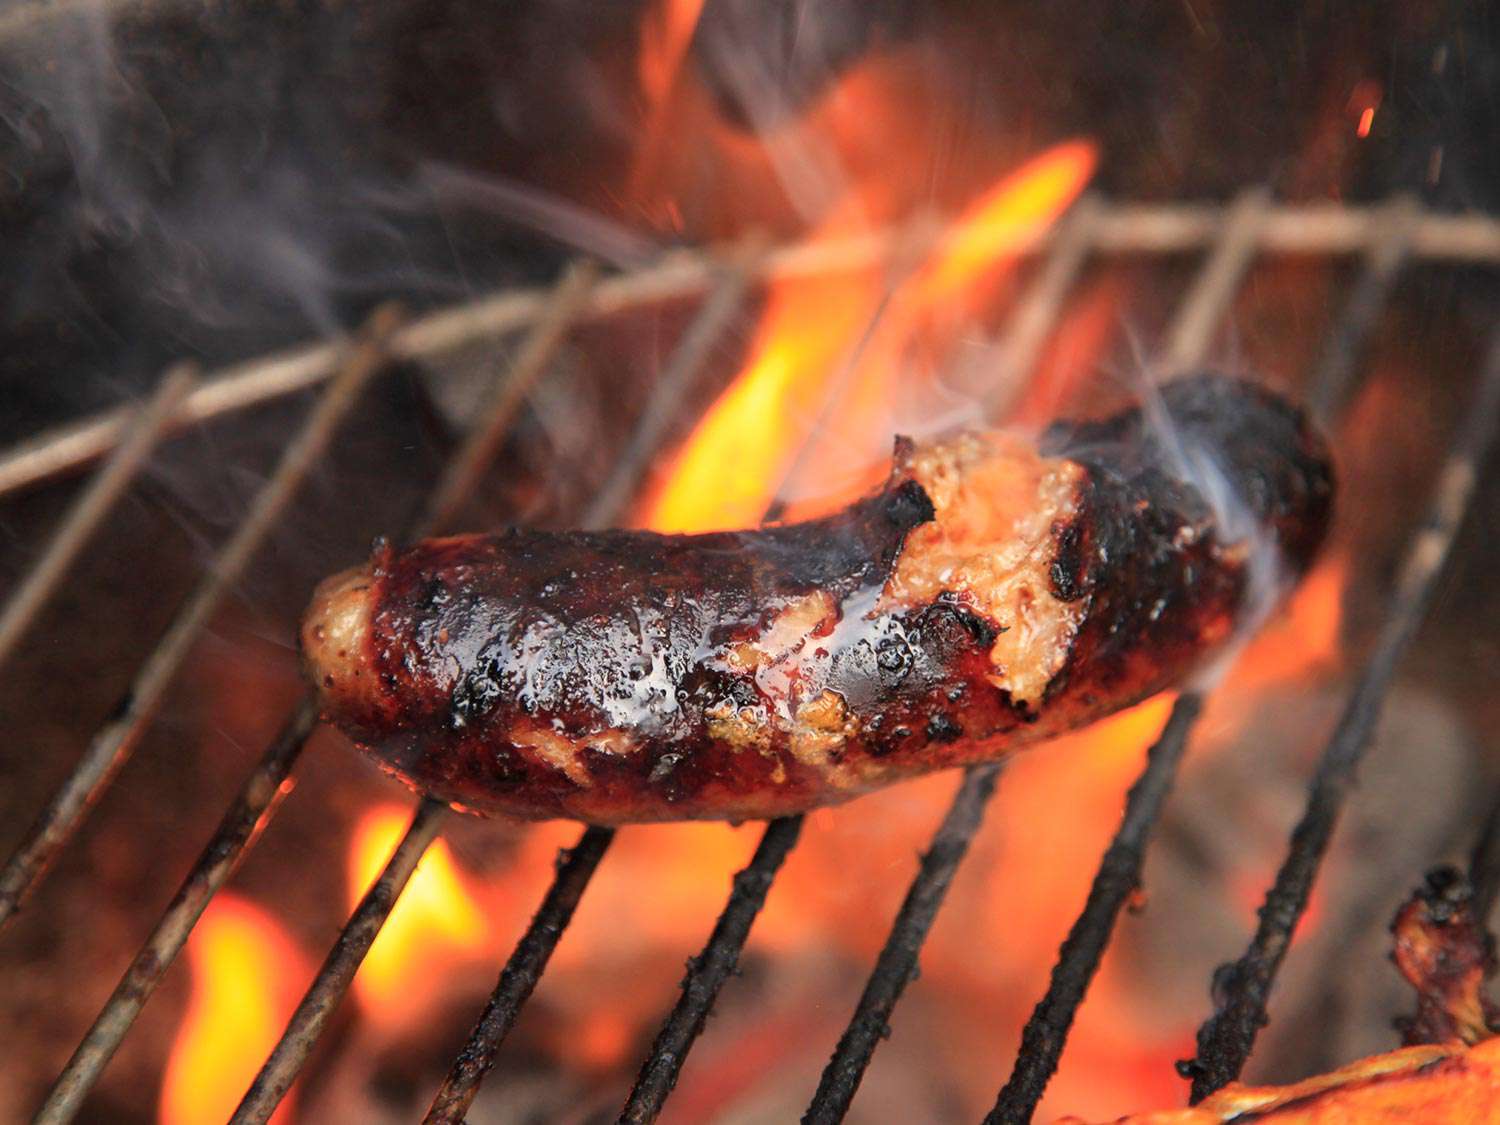 20150610-grilling-mistakes-04.jpg